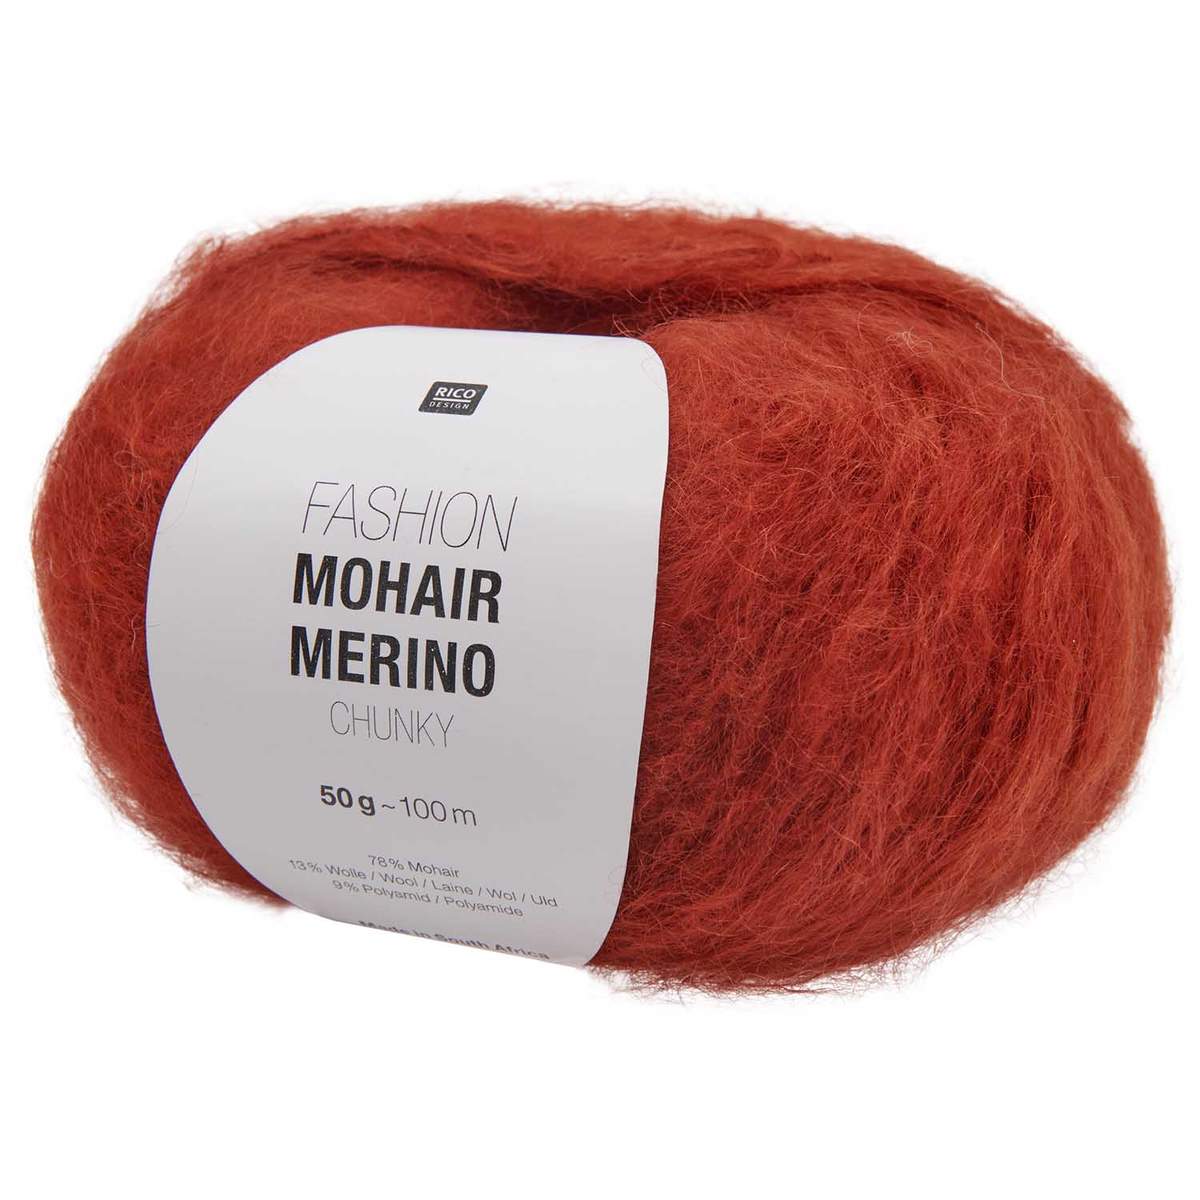 Fashion Mohair Merino chunky - Abverkauf